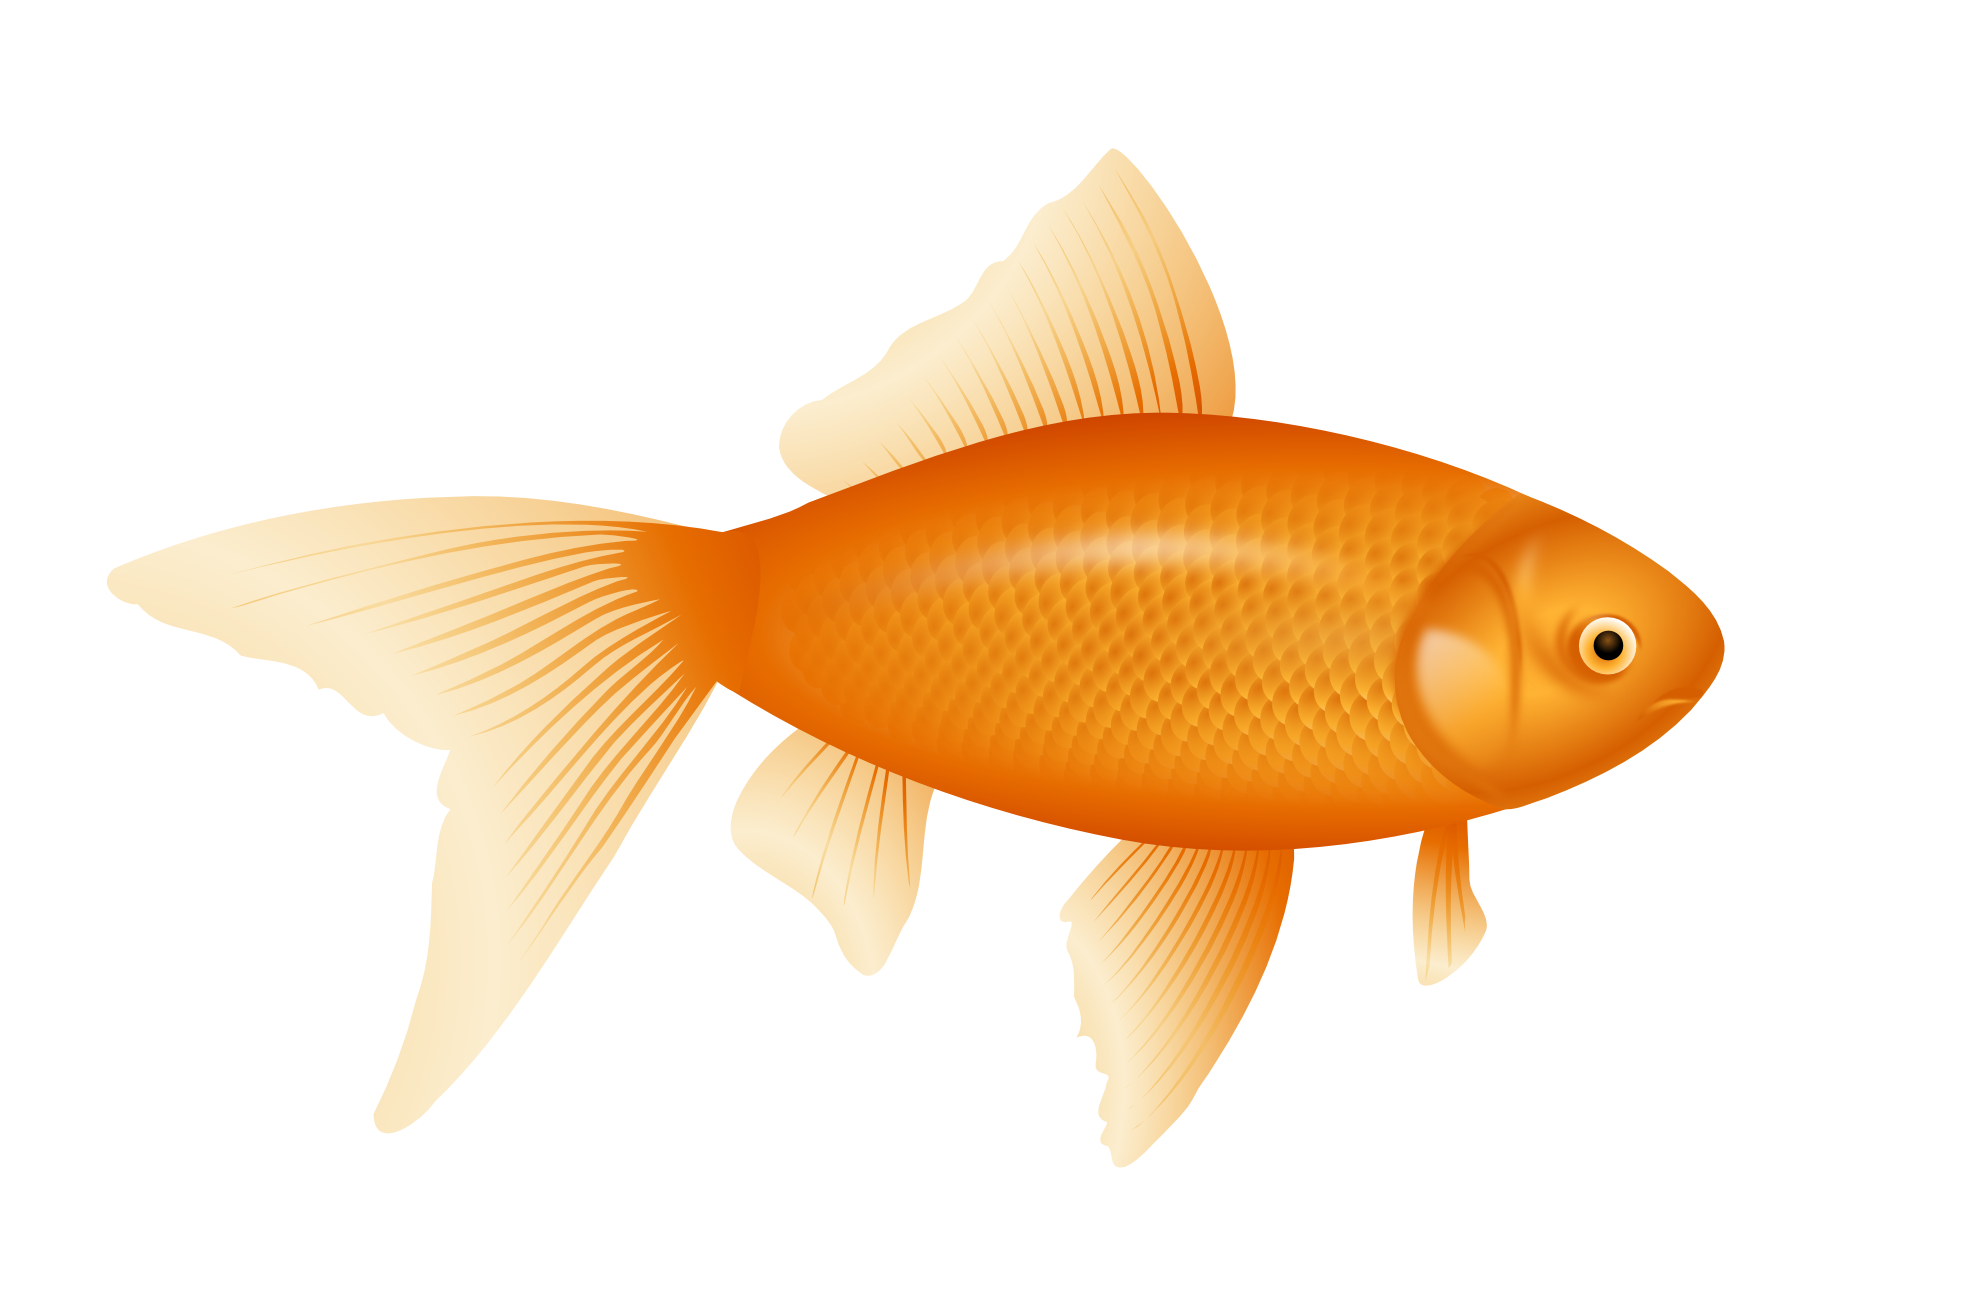 gold fish PNG image